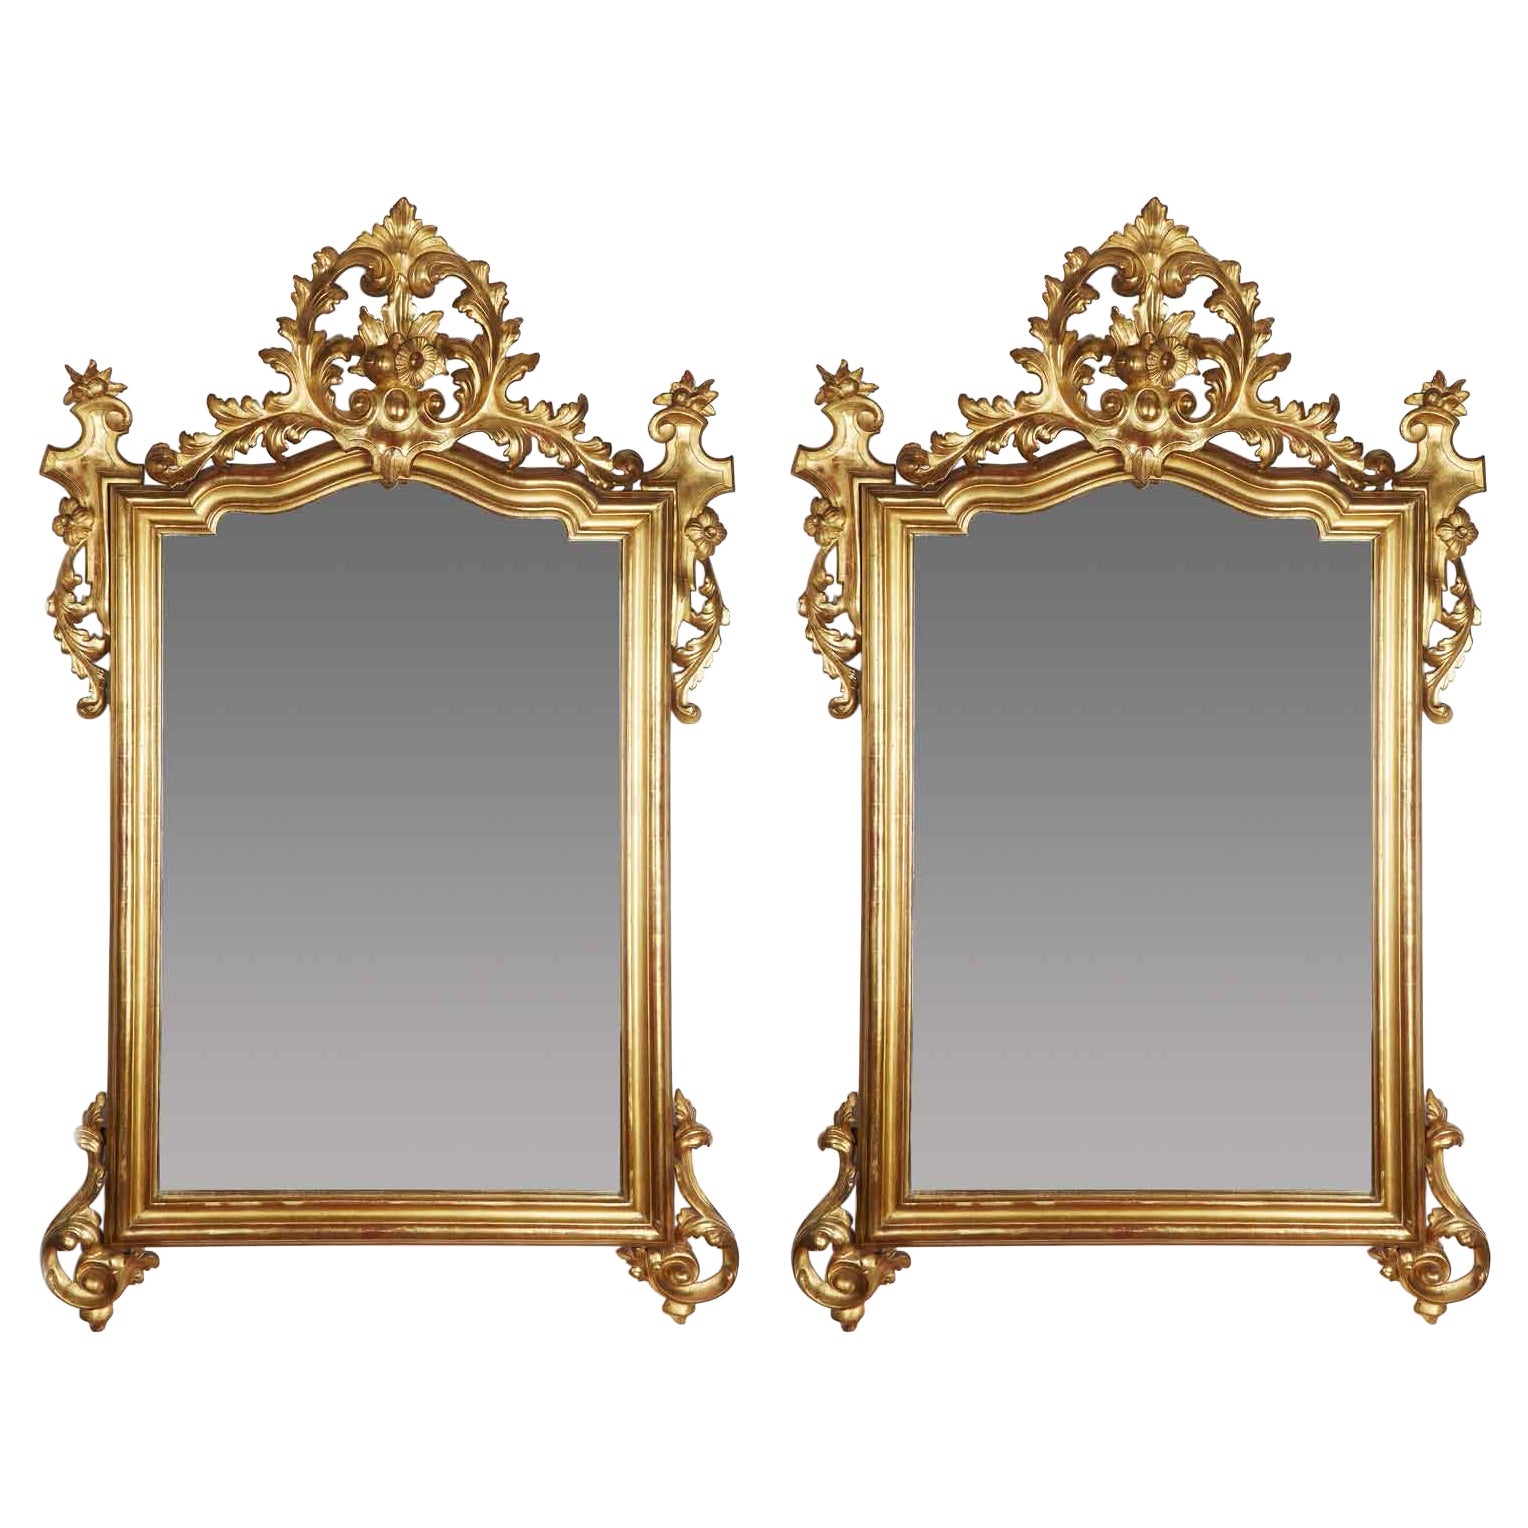 Pair of Italian Giltwood Mirrors 19th Century Neapolitan Louis Philippe Carving